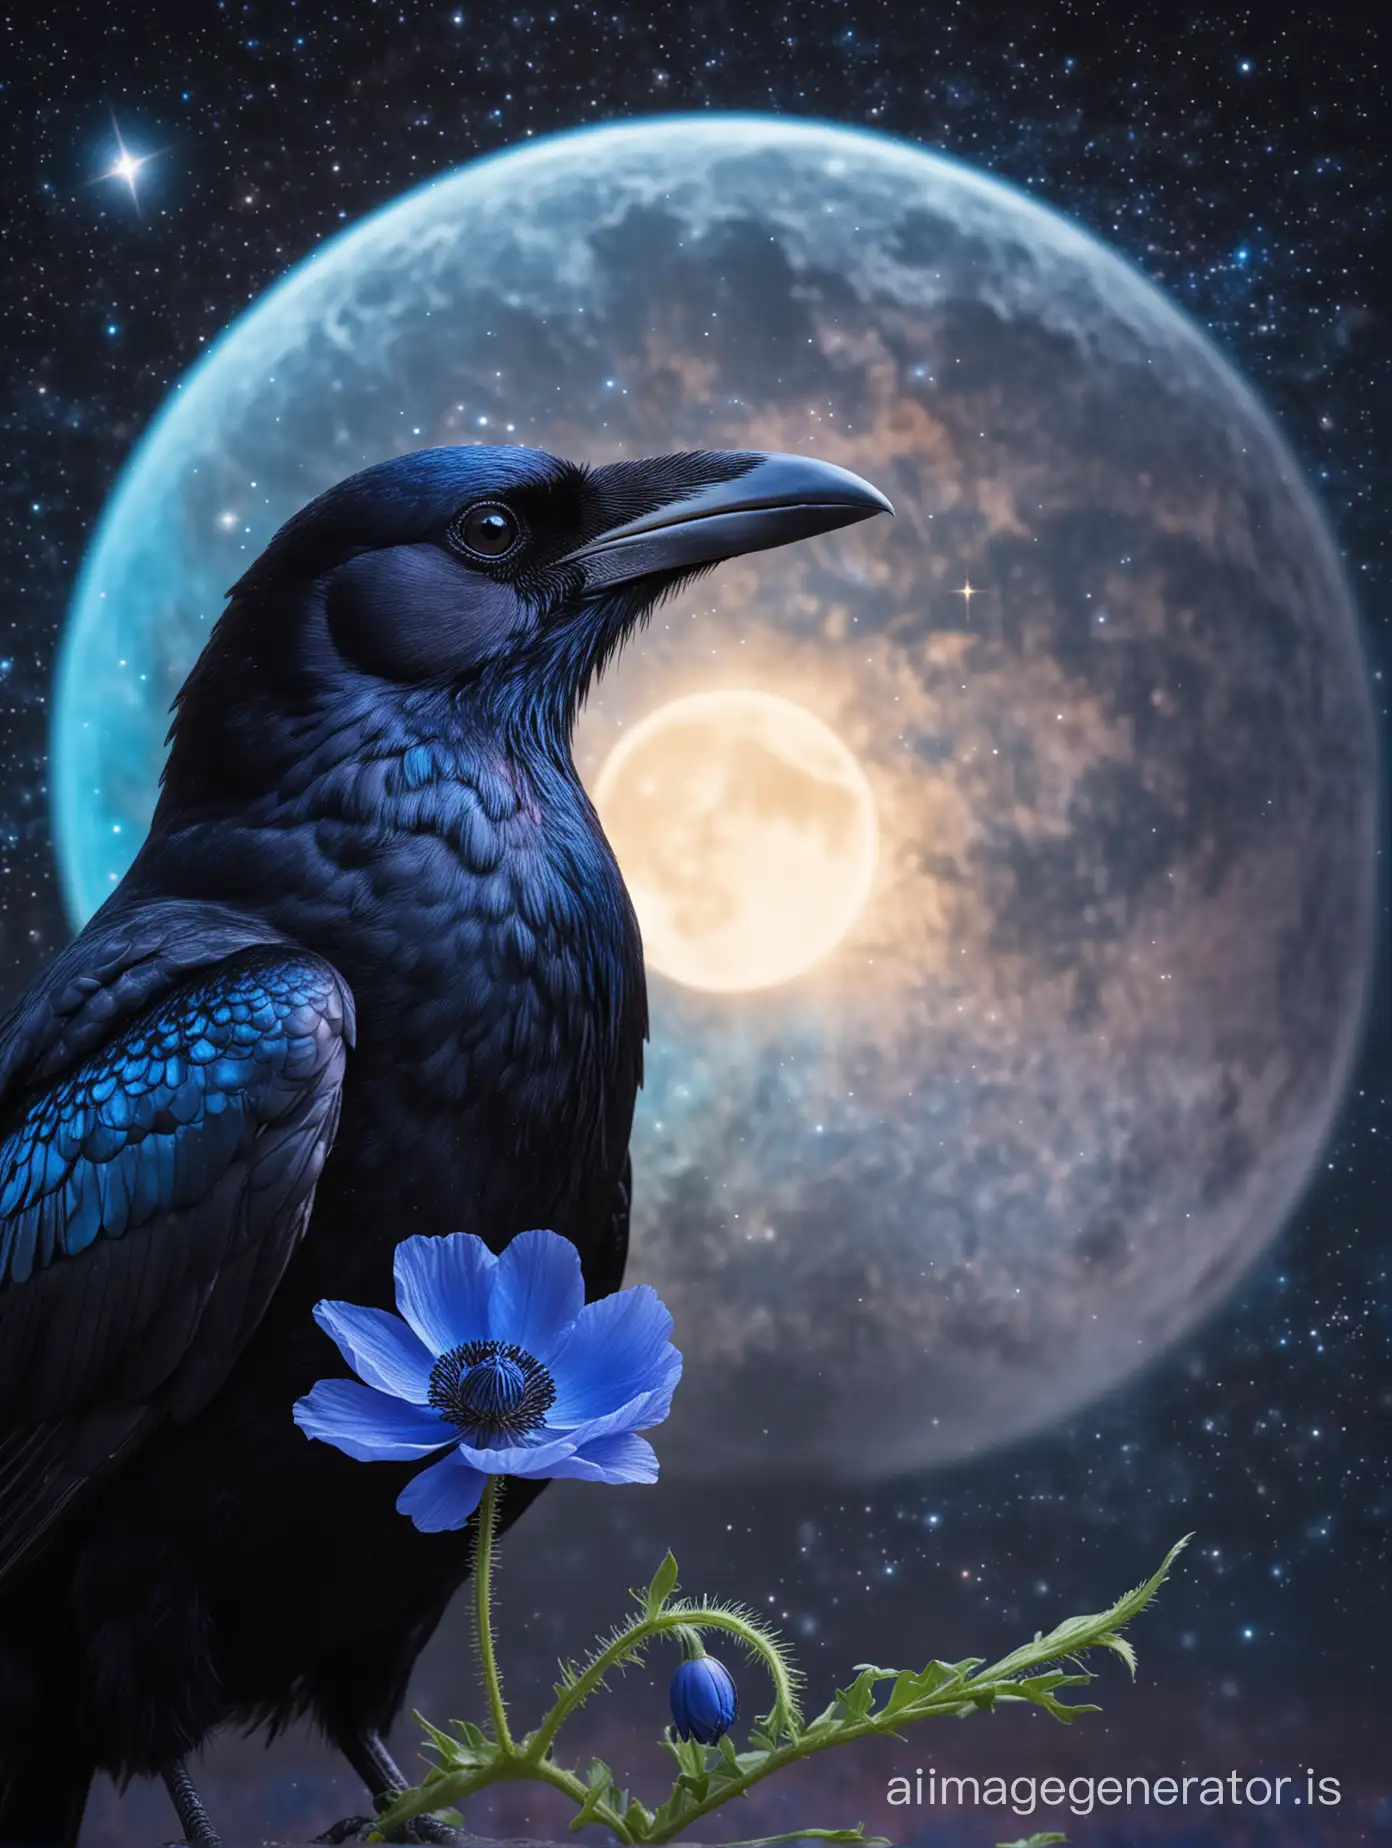 Iridescent-Black-Crow-with-Blue-Poppy-in-Cosmic-Sky